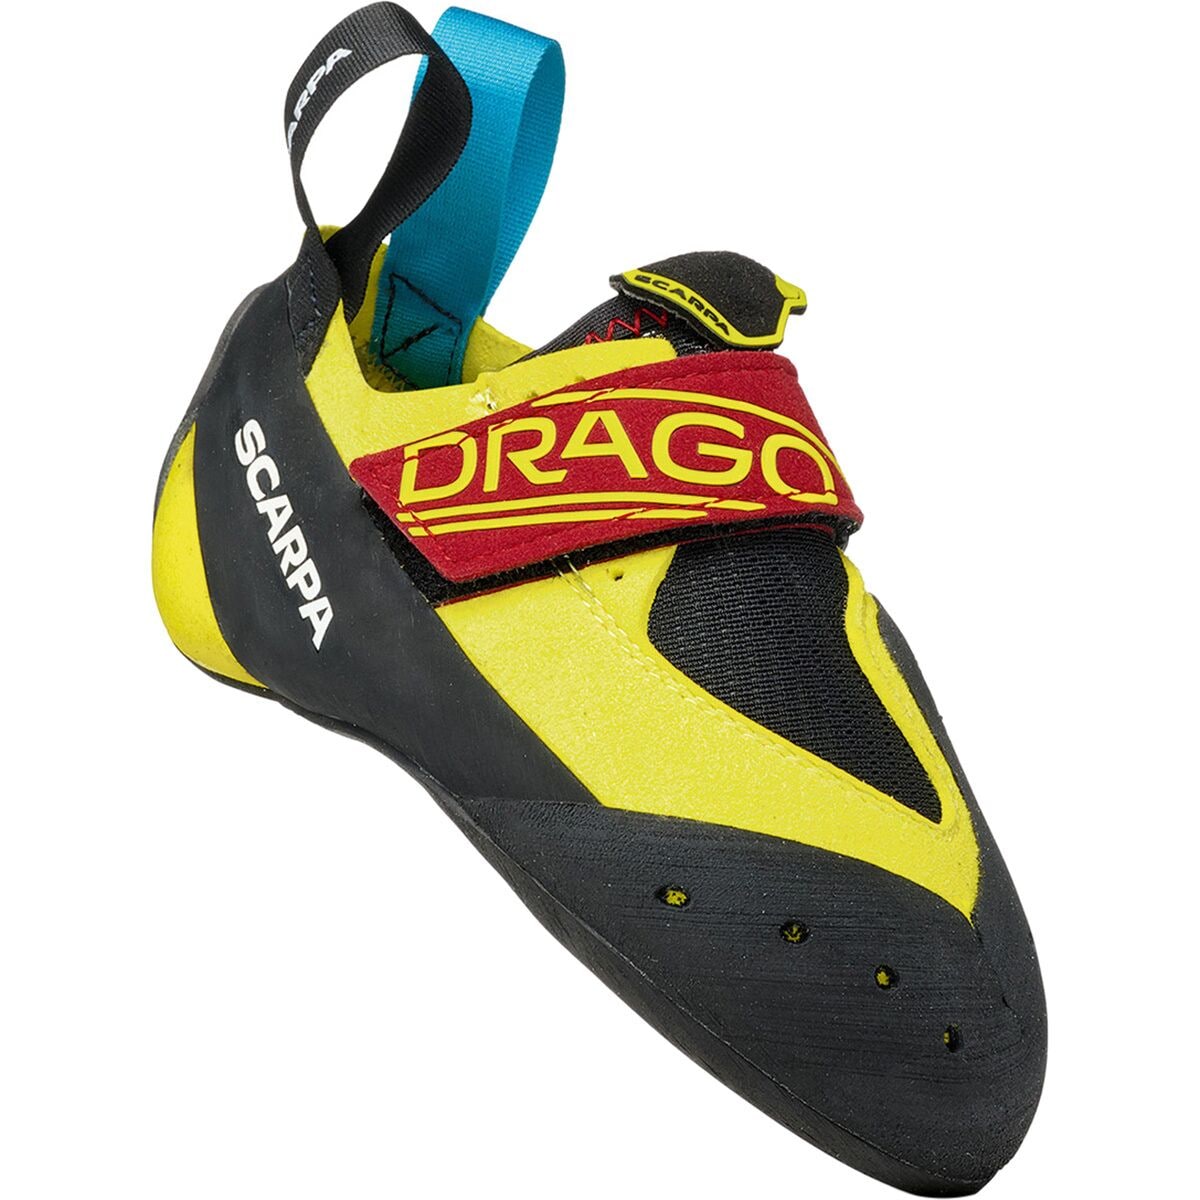 Used Scarpa Drago Climbing Shoes